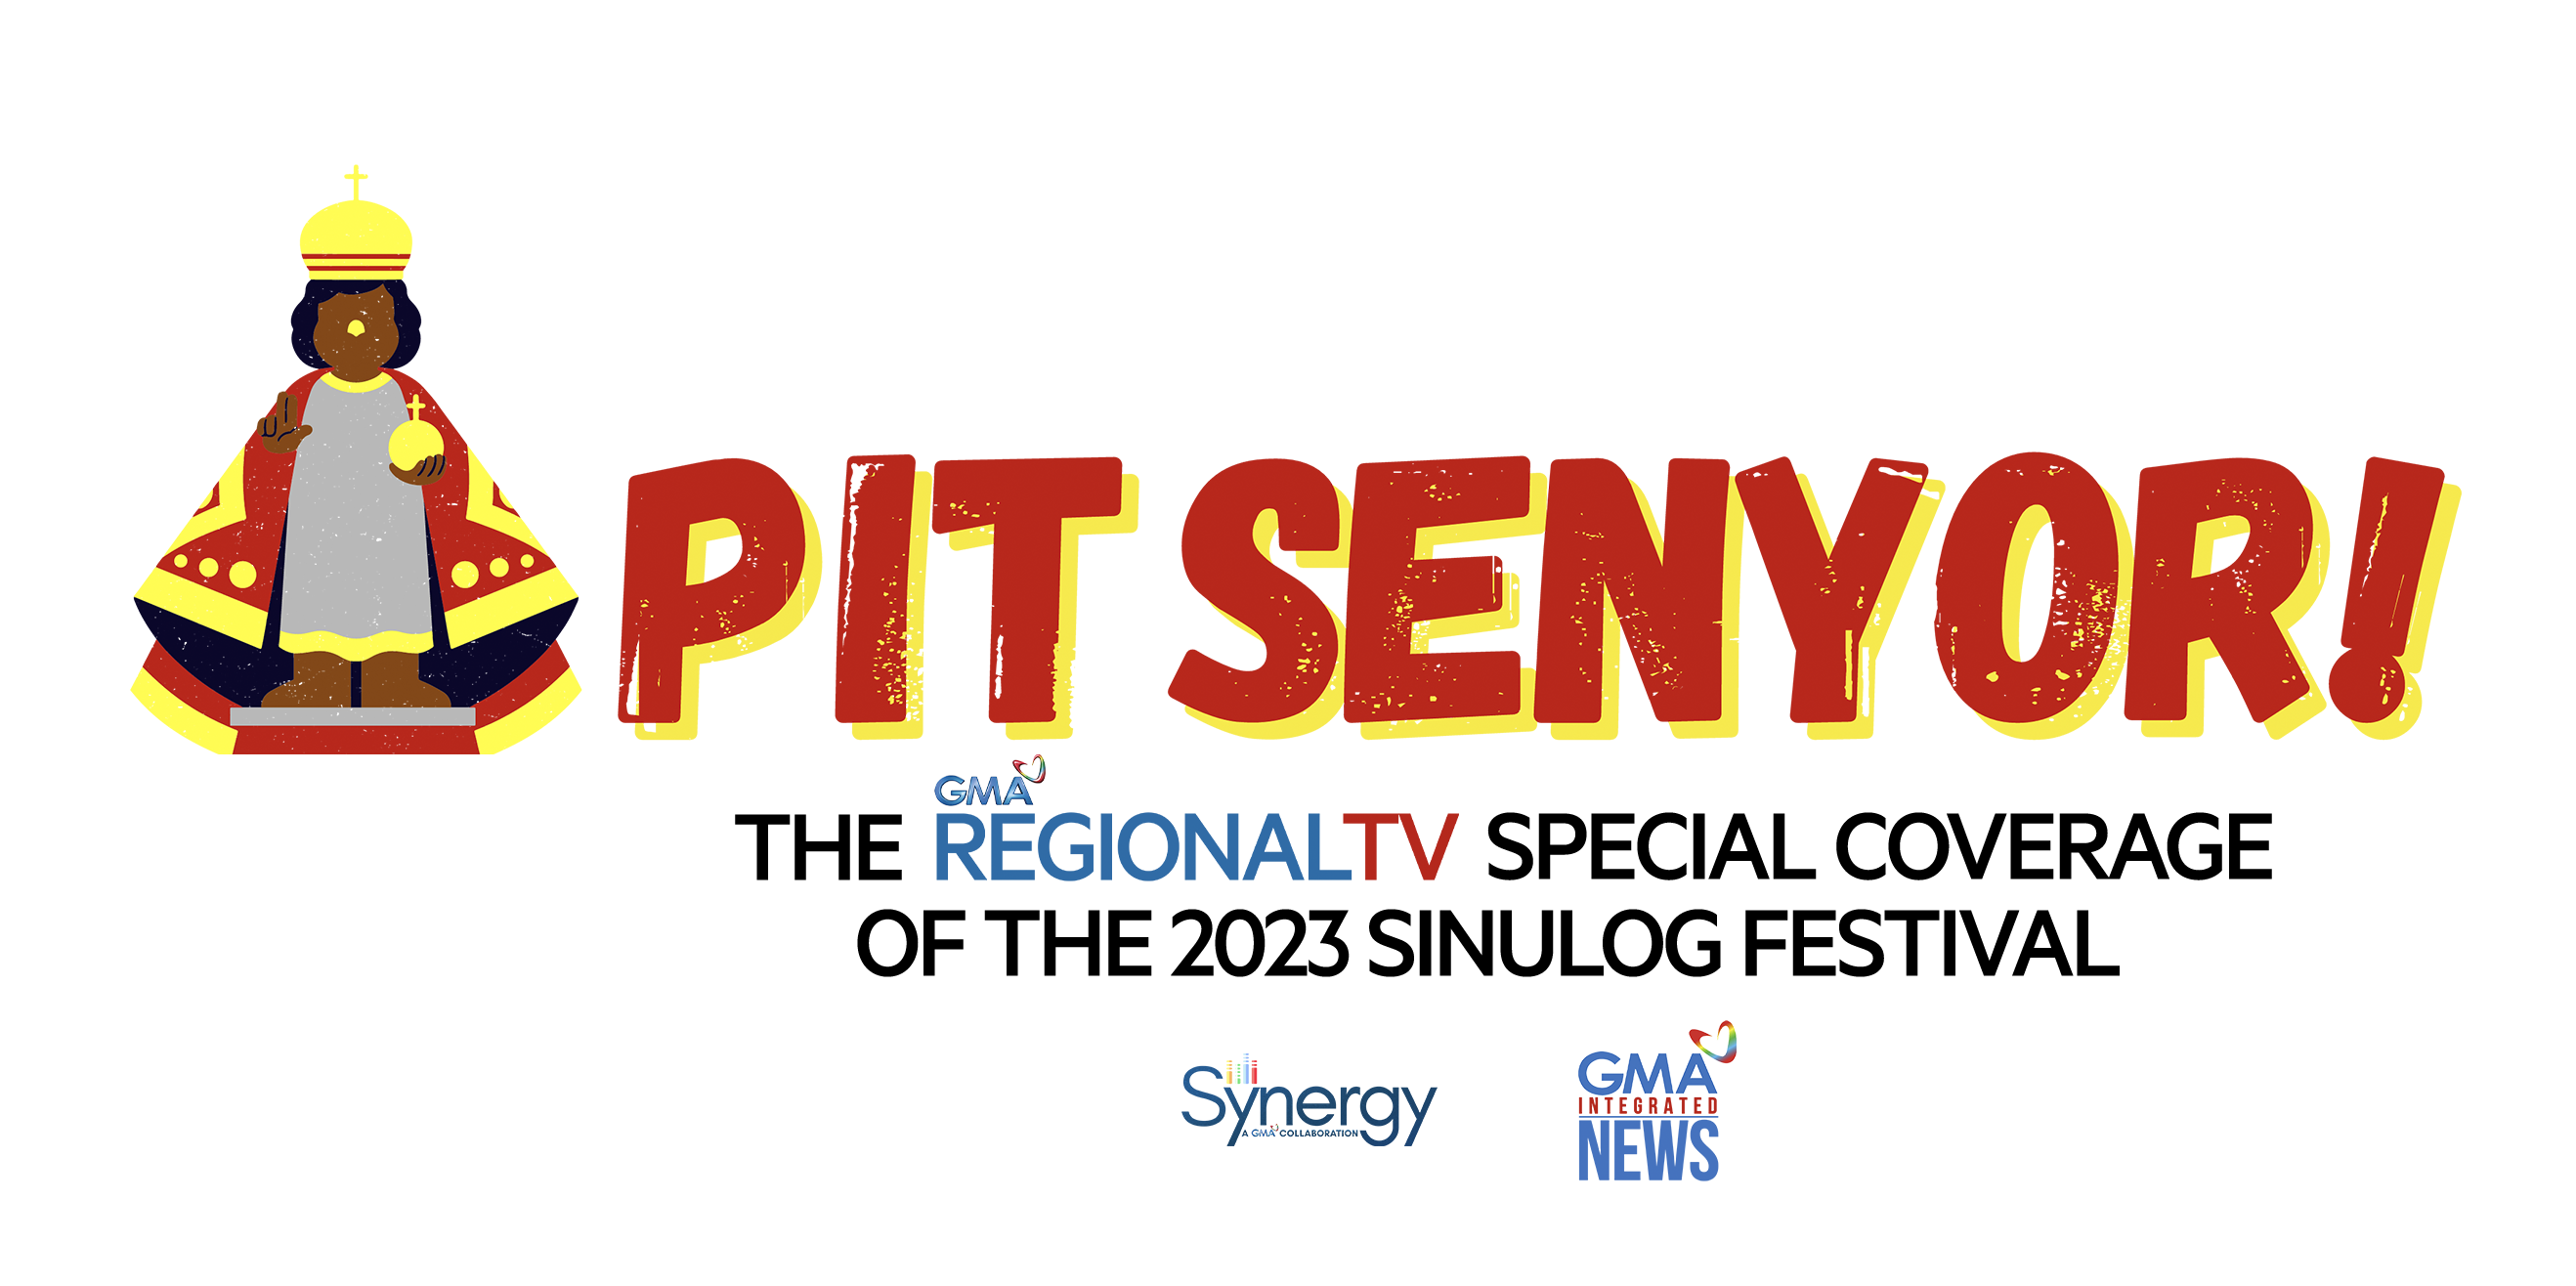 Pit Senyor The GMA Regional TV Special Coverage